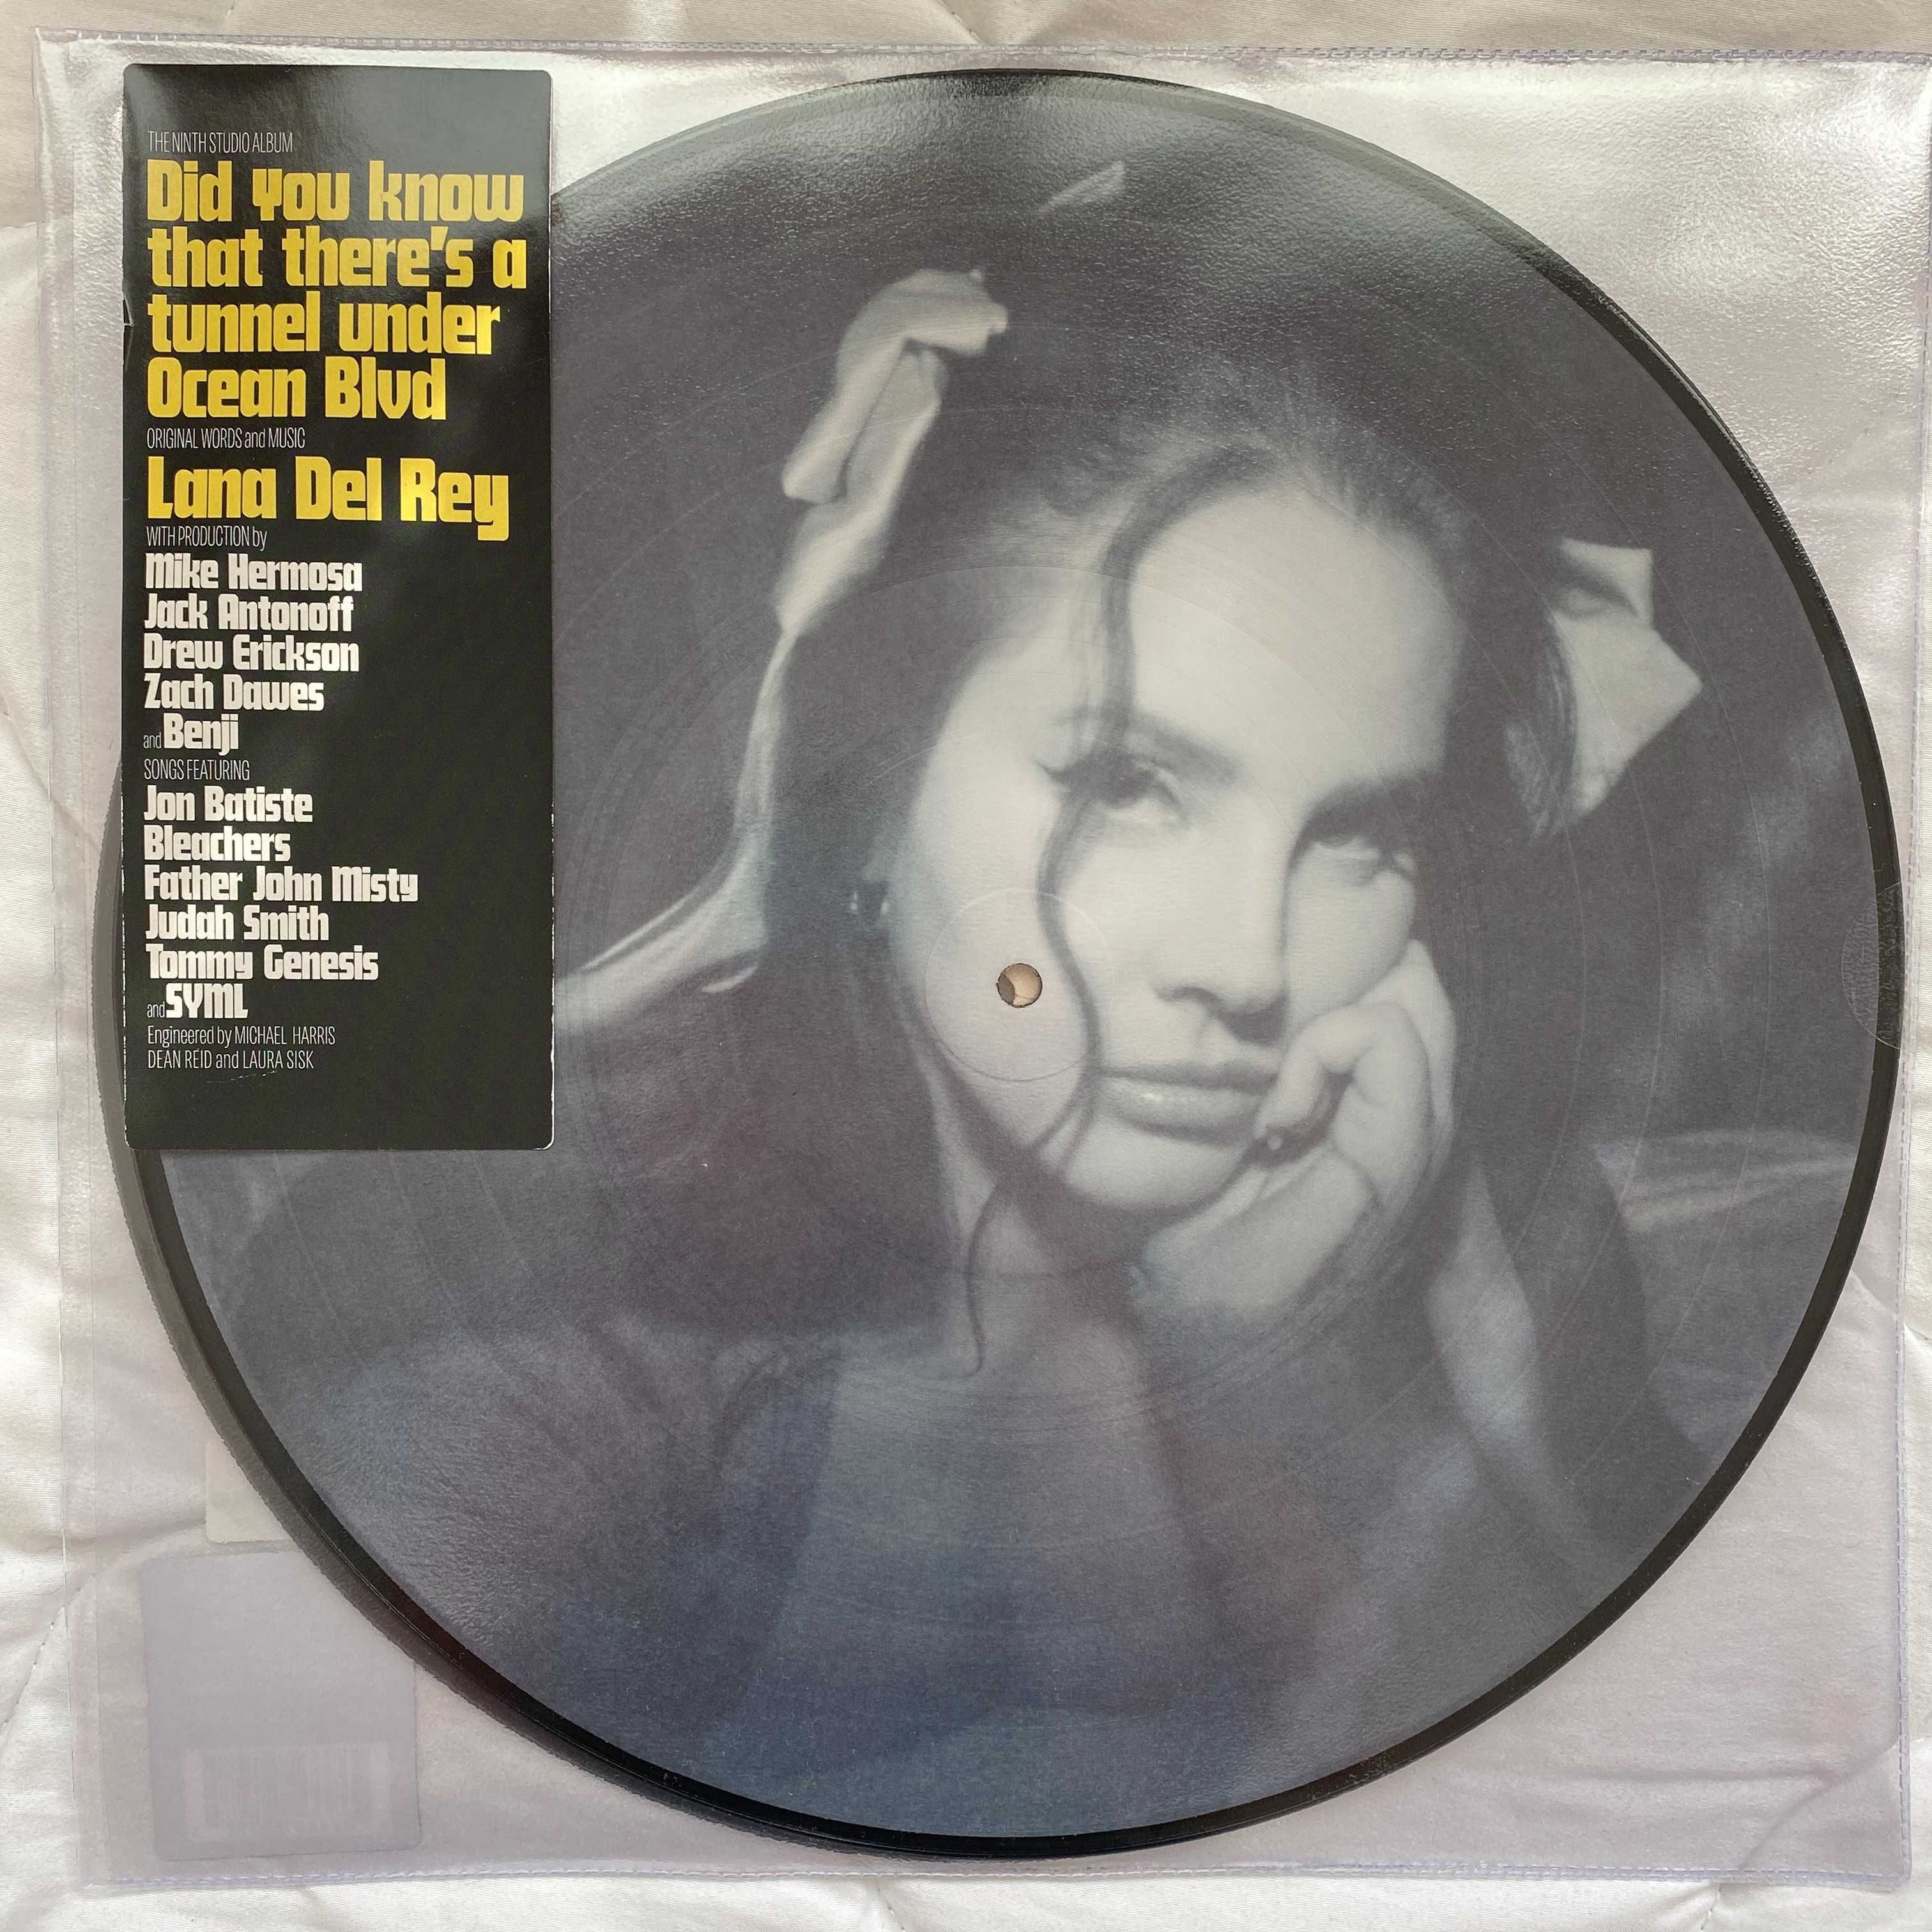 Lana Del Rey – Ocean Blvd Limited Edition, Picture Vinyl